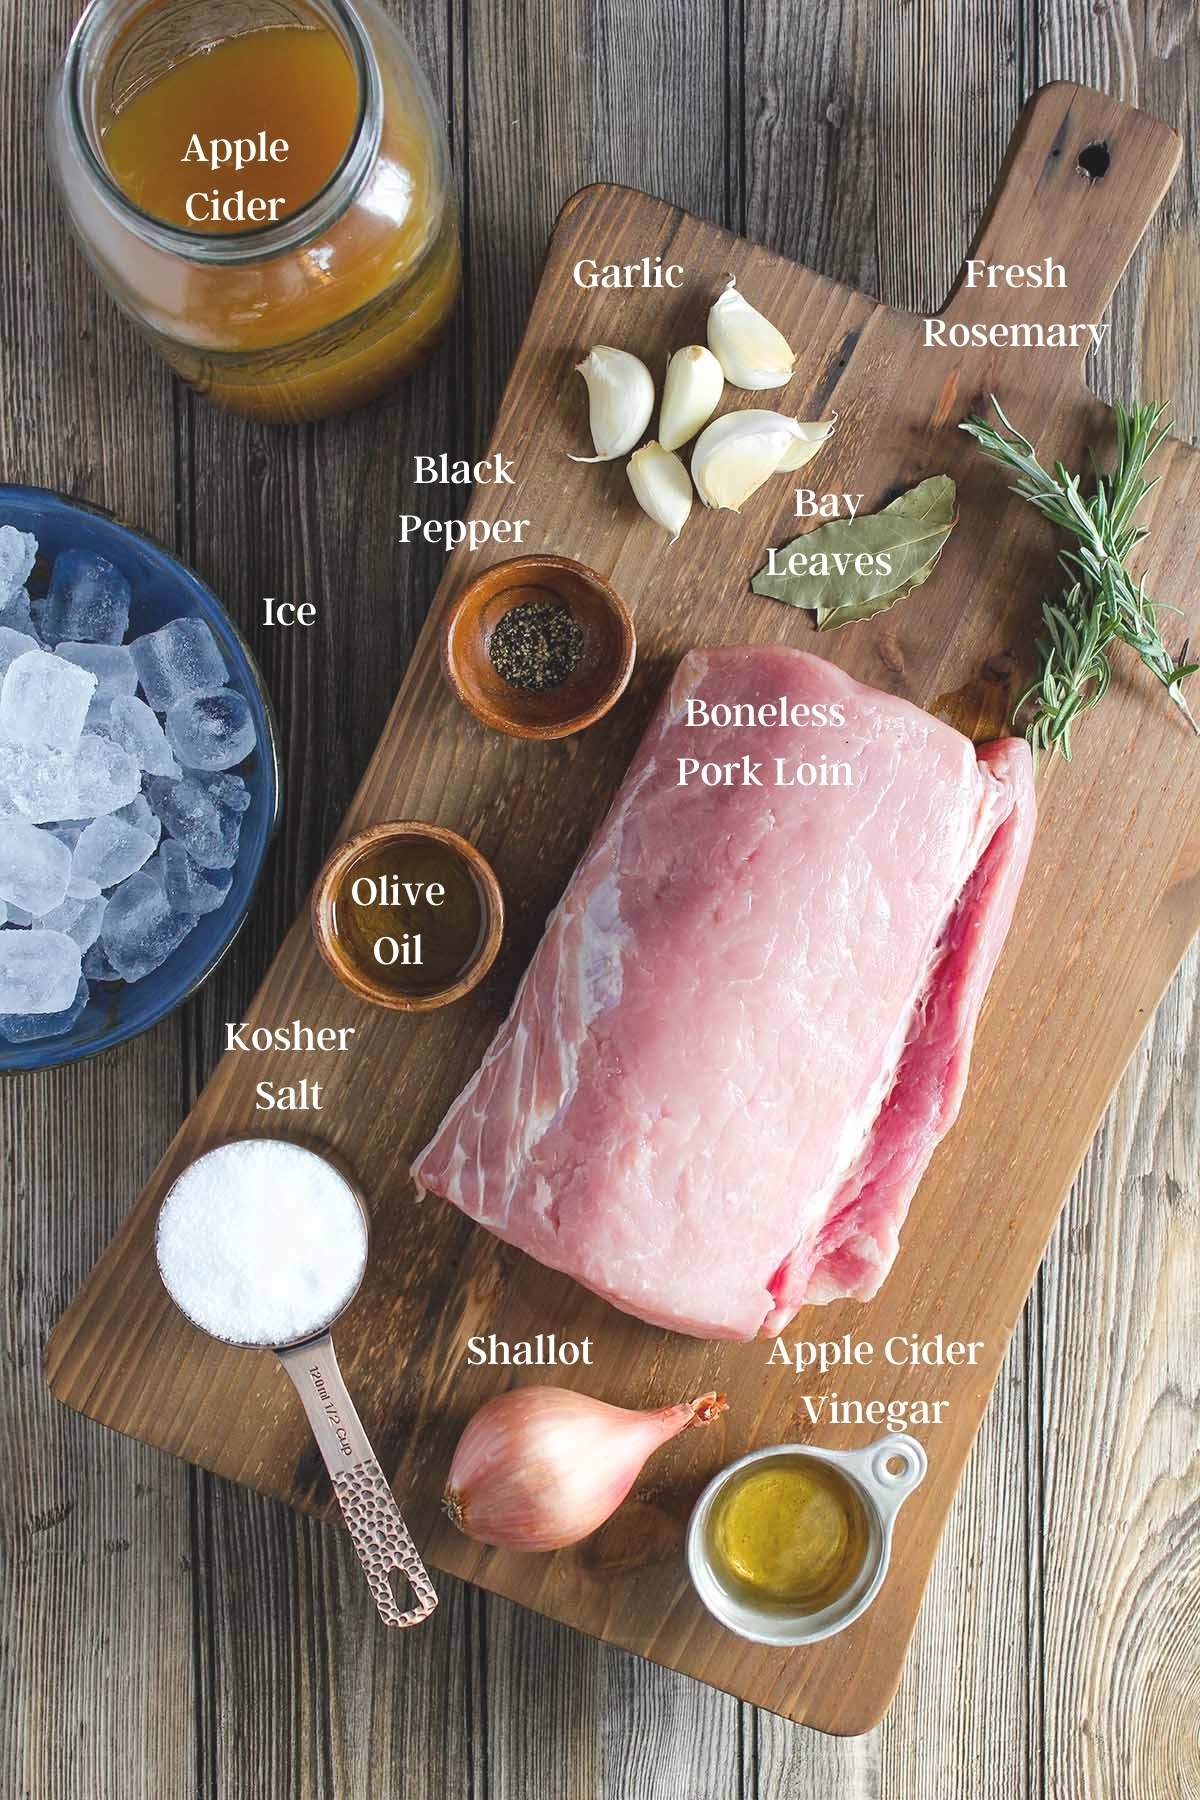 Ingredients for apple cider pork loin (see recipe card).